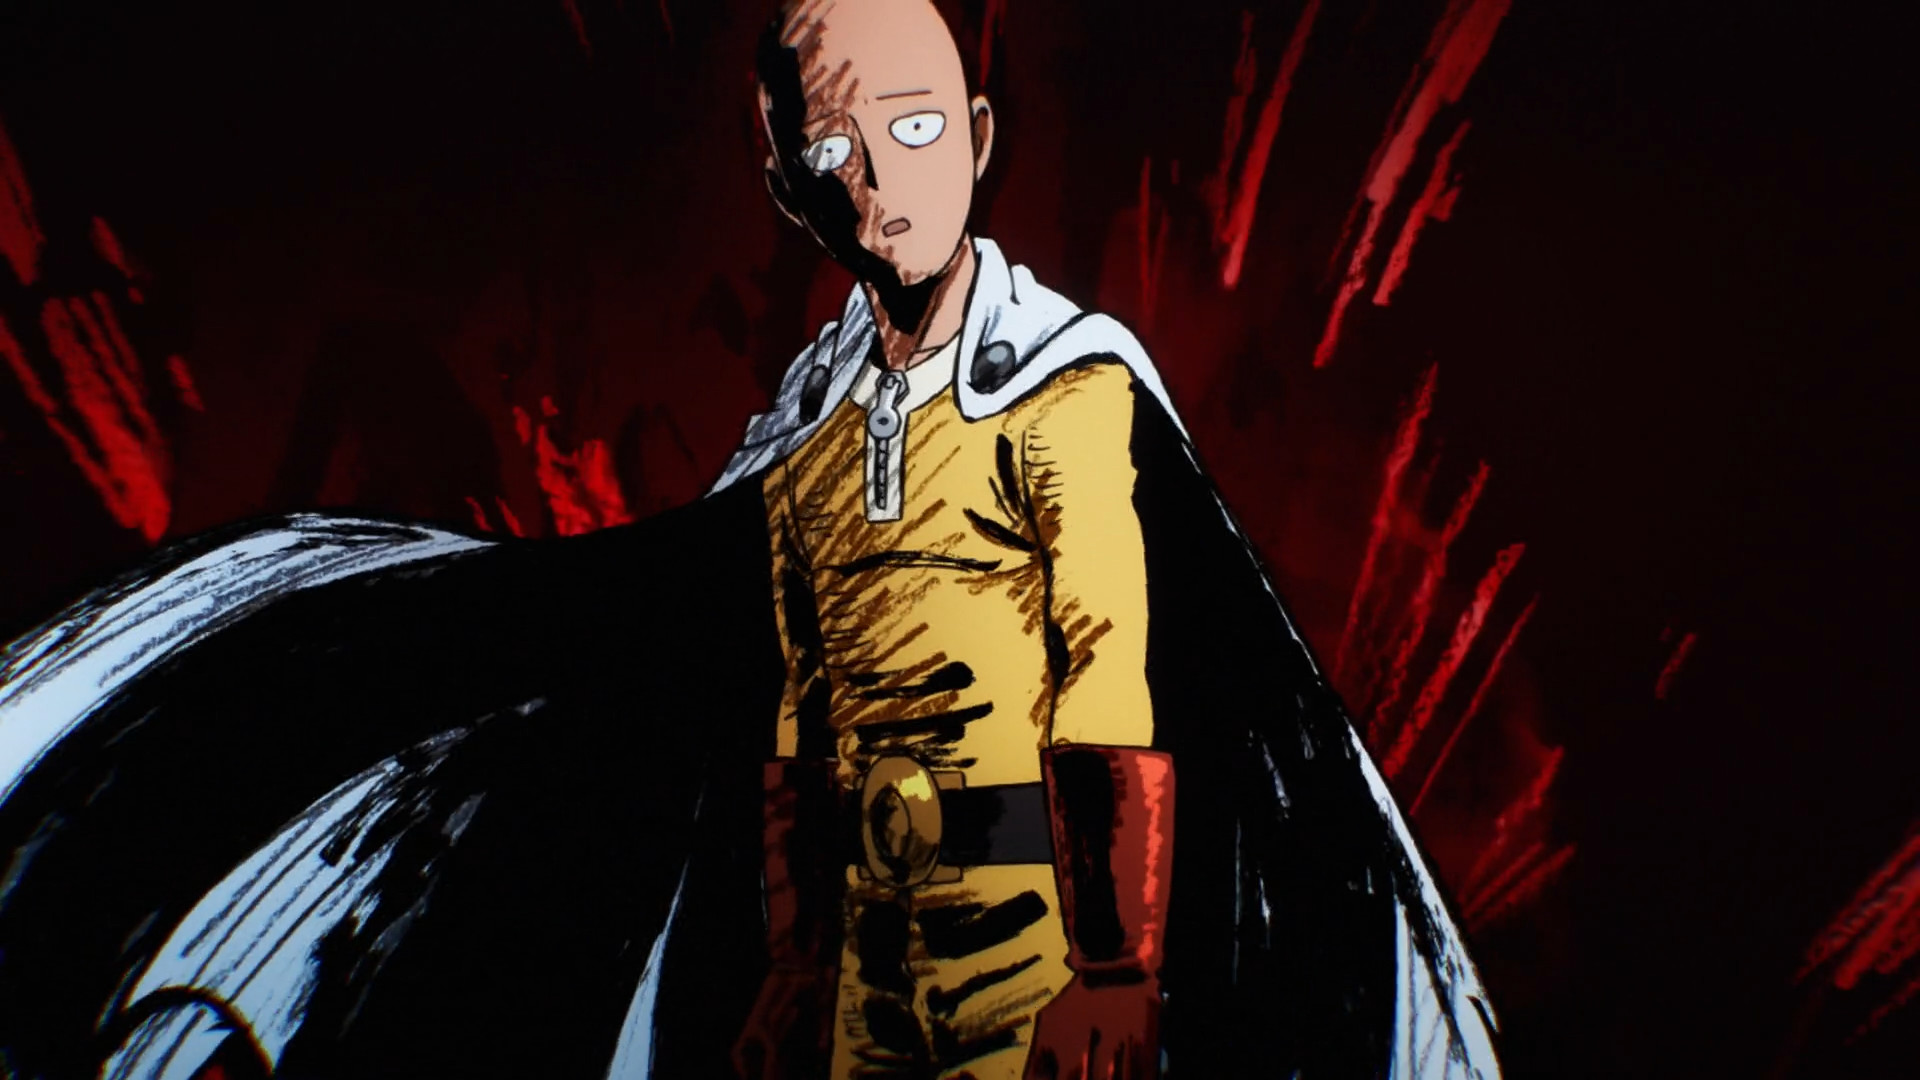 Anime Digital Art One Punch Man Saitama Superhero Bald Anime Man Wallpaper  - Resolution:1920x1080 - ID:618684 